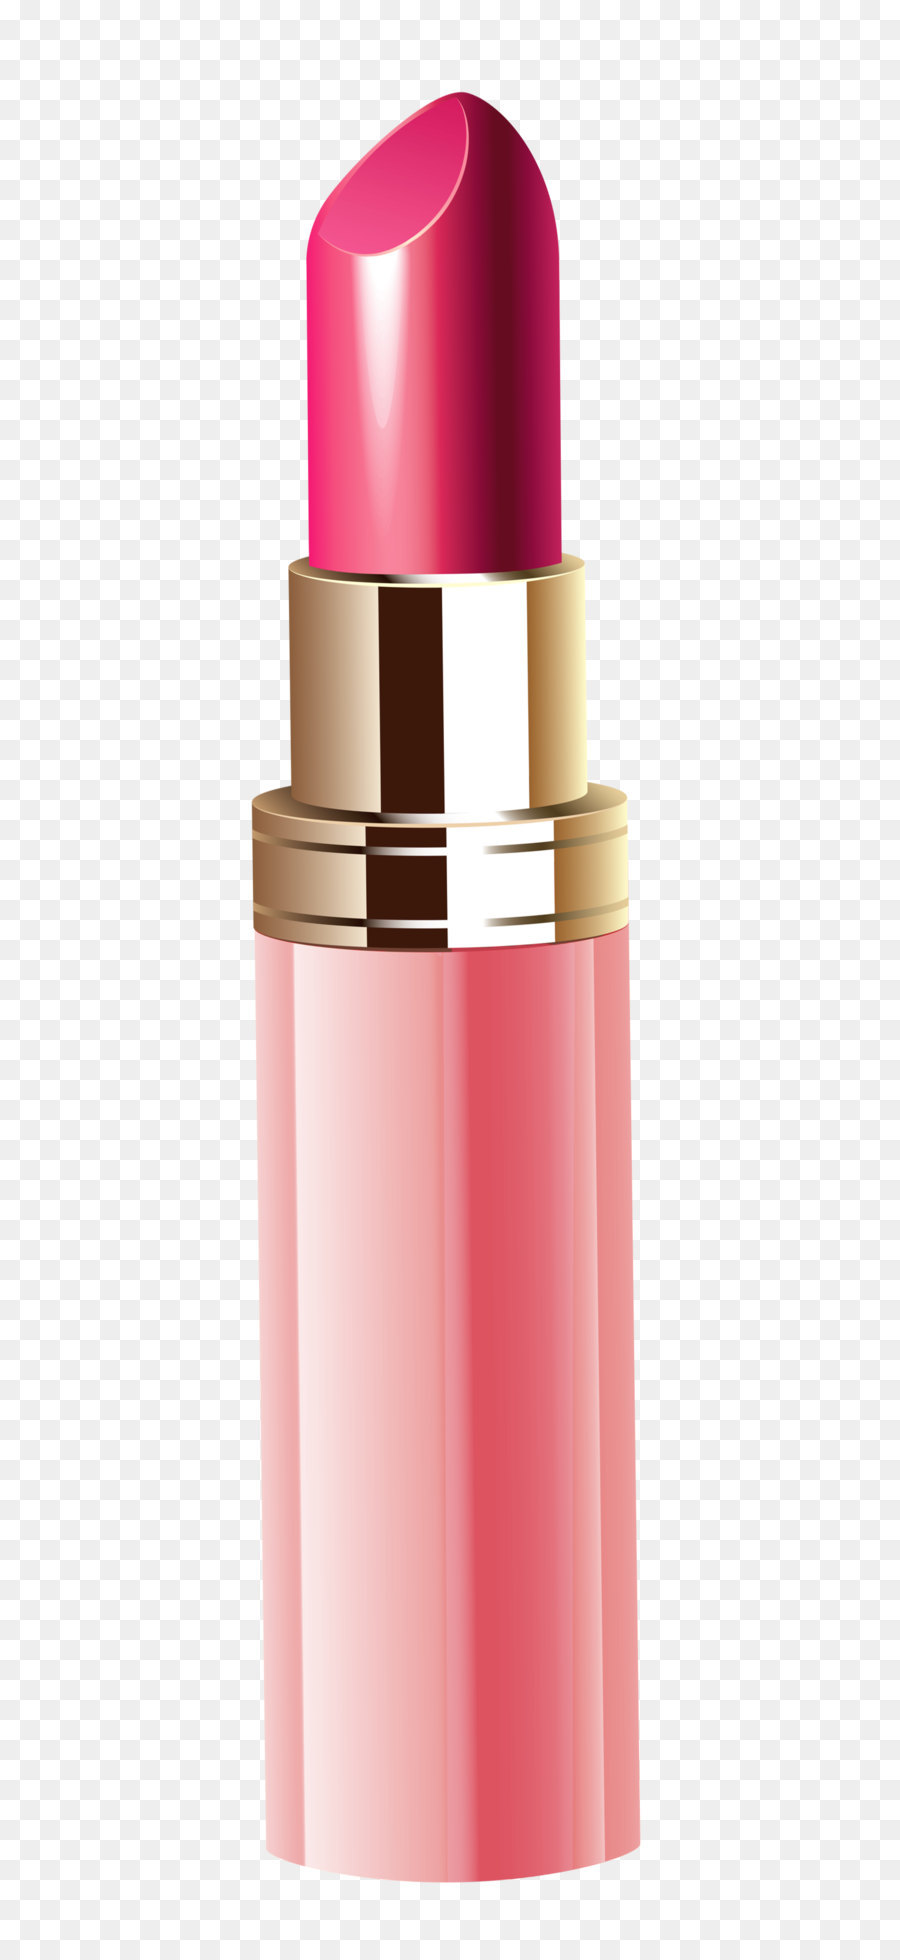 Lipstick Cosmetics Clip art - Pink Lipstick PNG Clipart Image png download - 1062*3198 - Free Transparent Lipstick png Download.